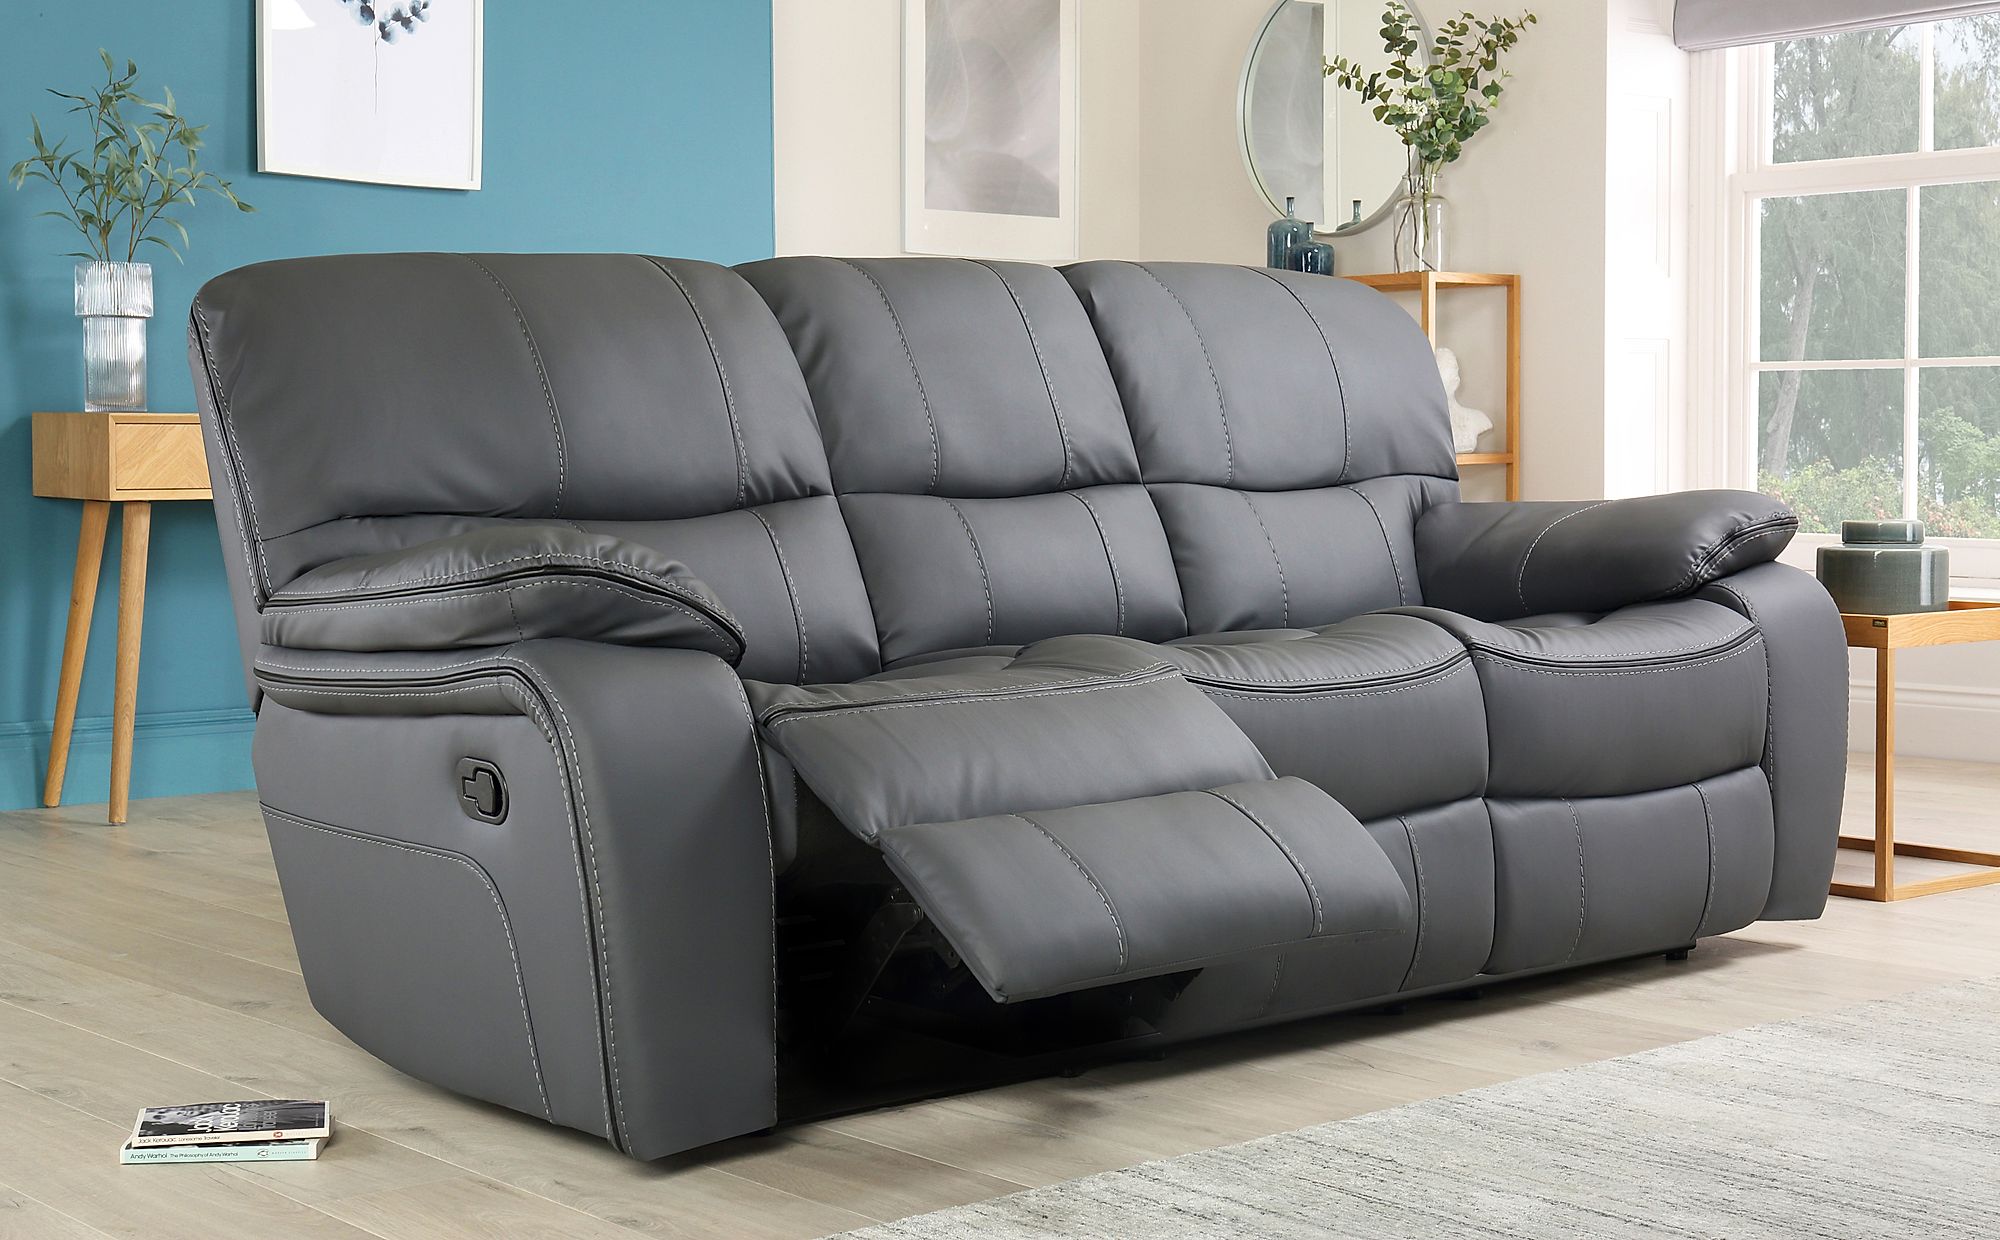 Grey Sofa Chair : $699.99 - Bellingham Gray Sofa - Classic